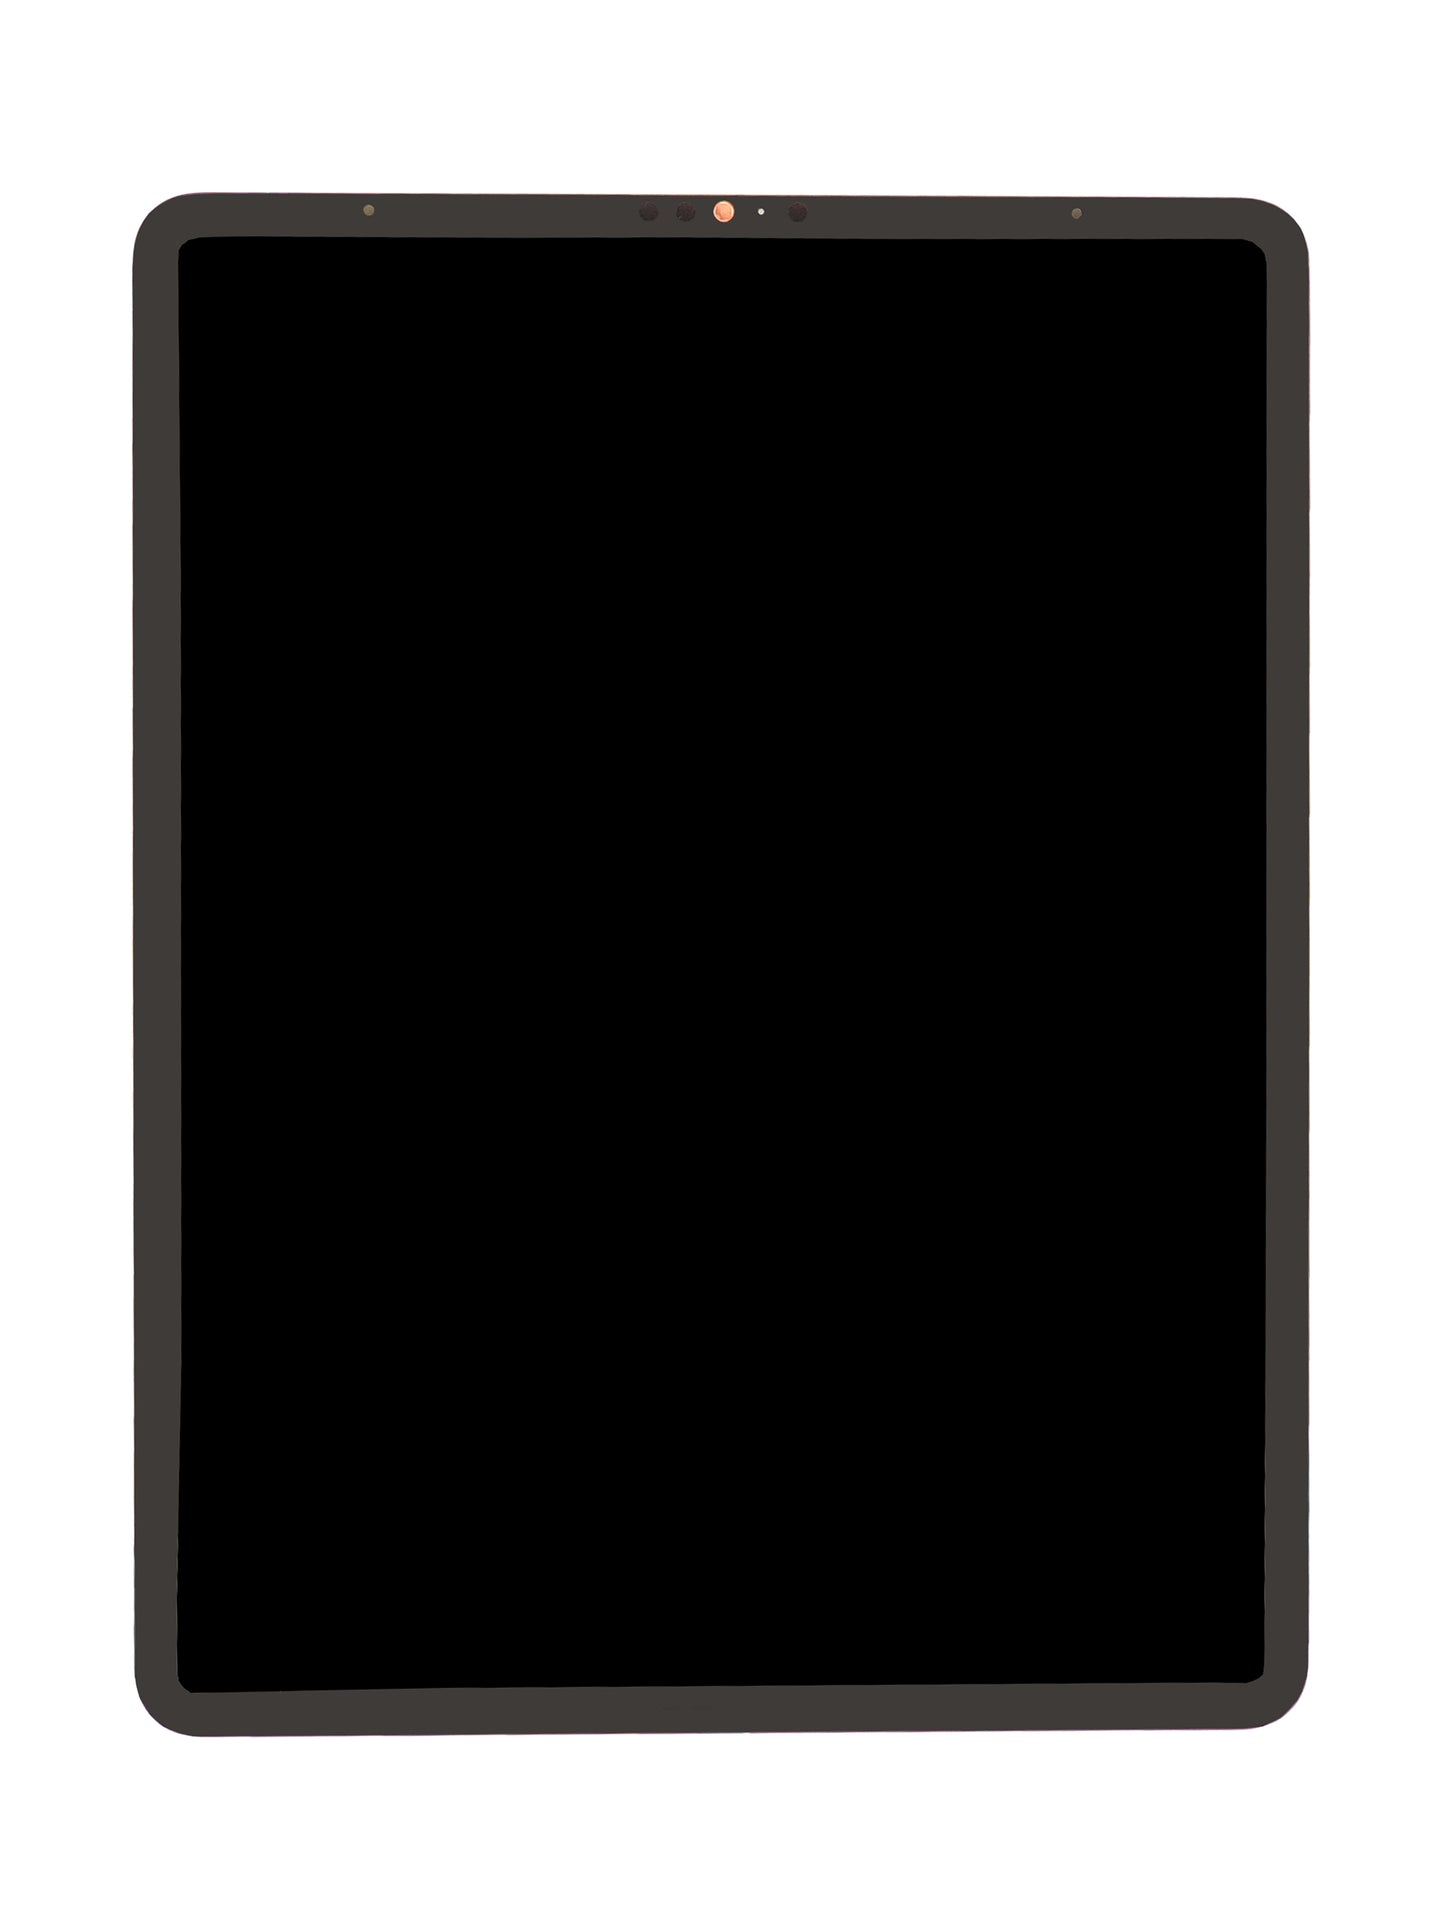 iPad Pro 12.9" (5th Gen) Screen Assembly / Pro 12.9" (6th Gen) (FOG) (Black)